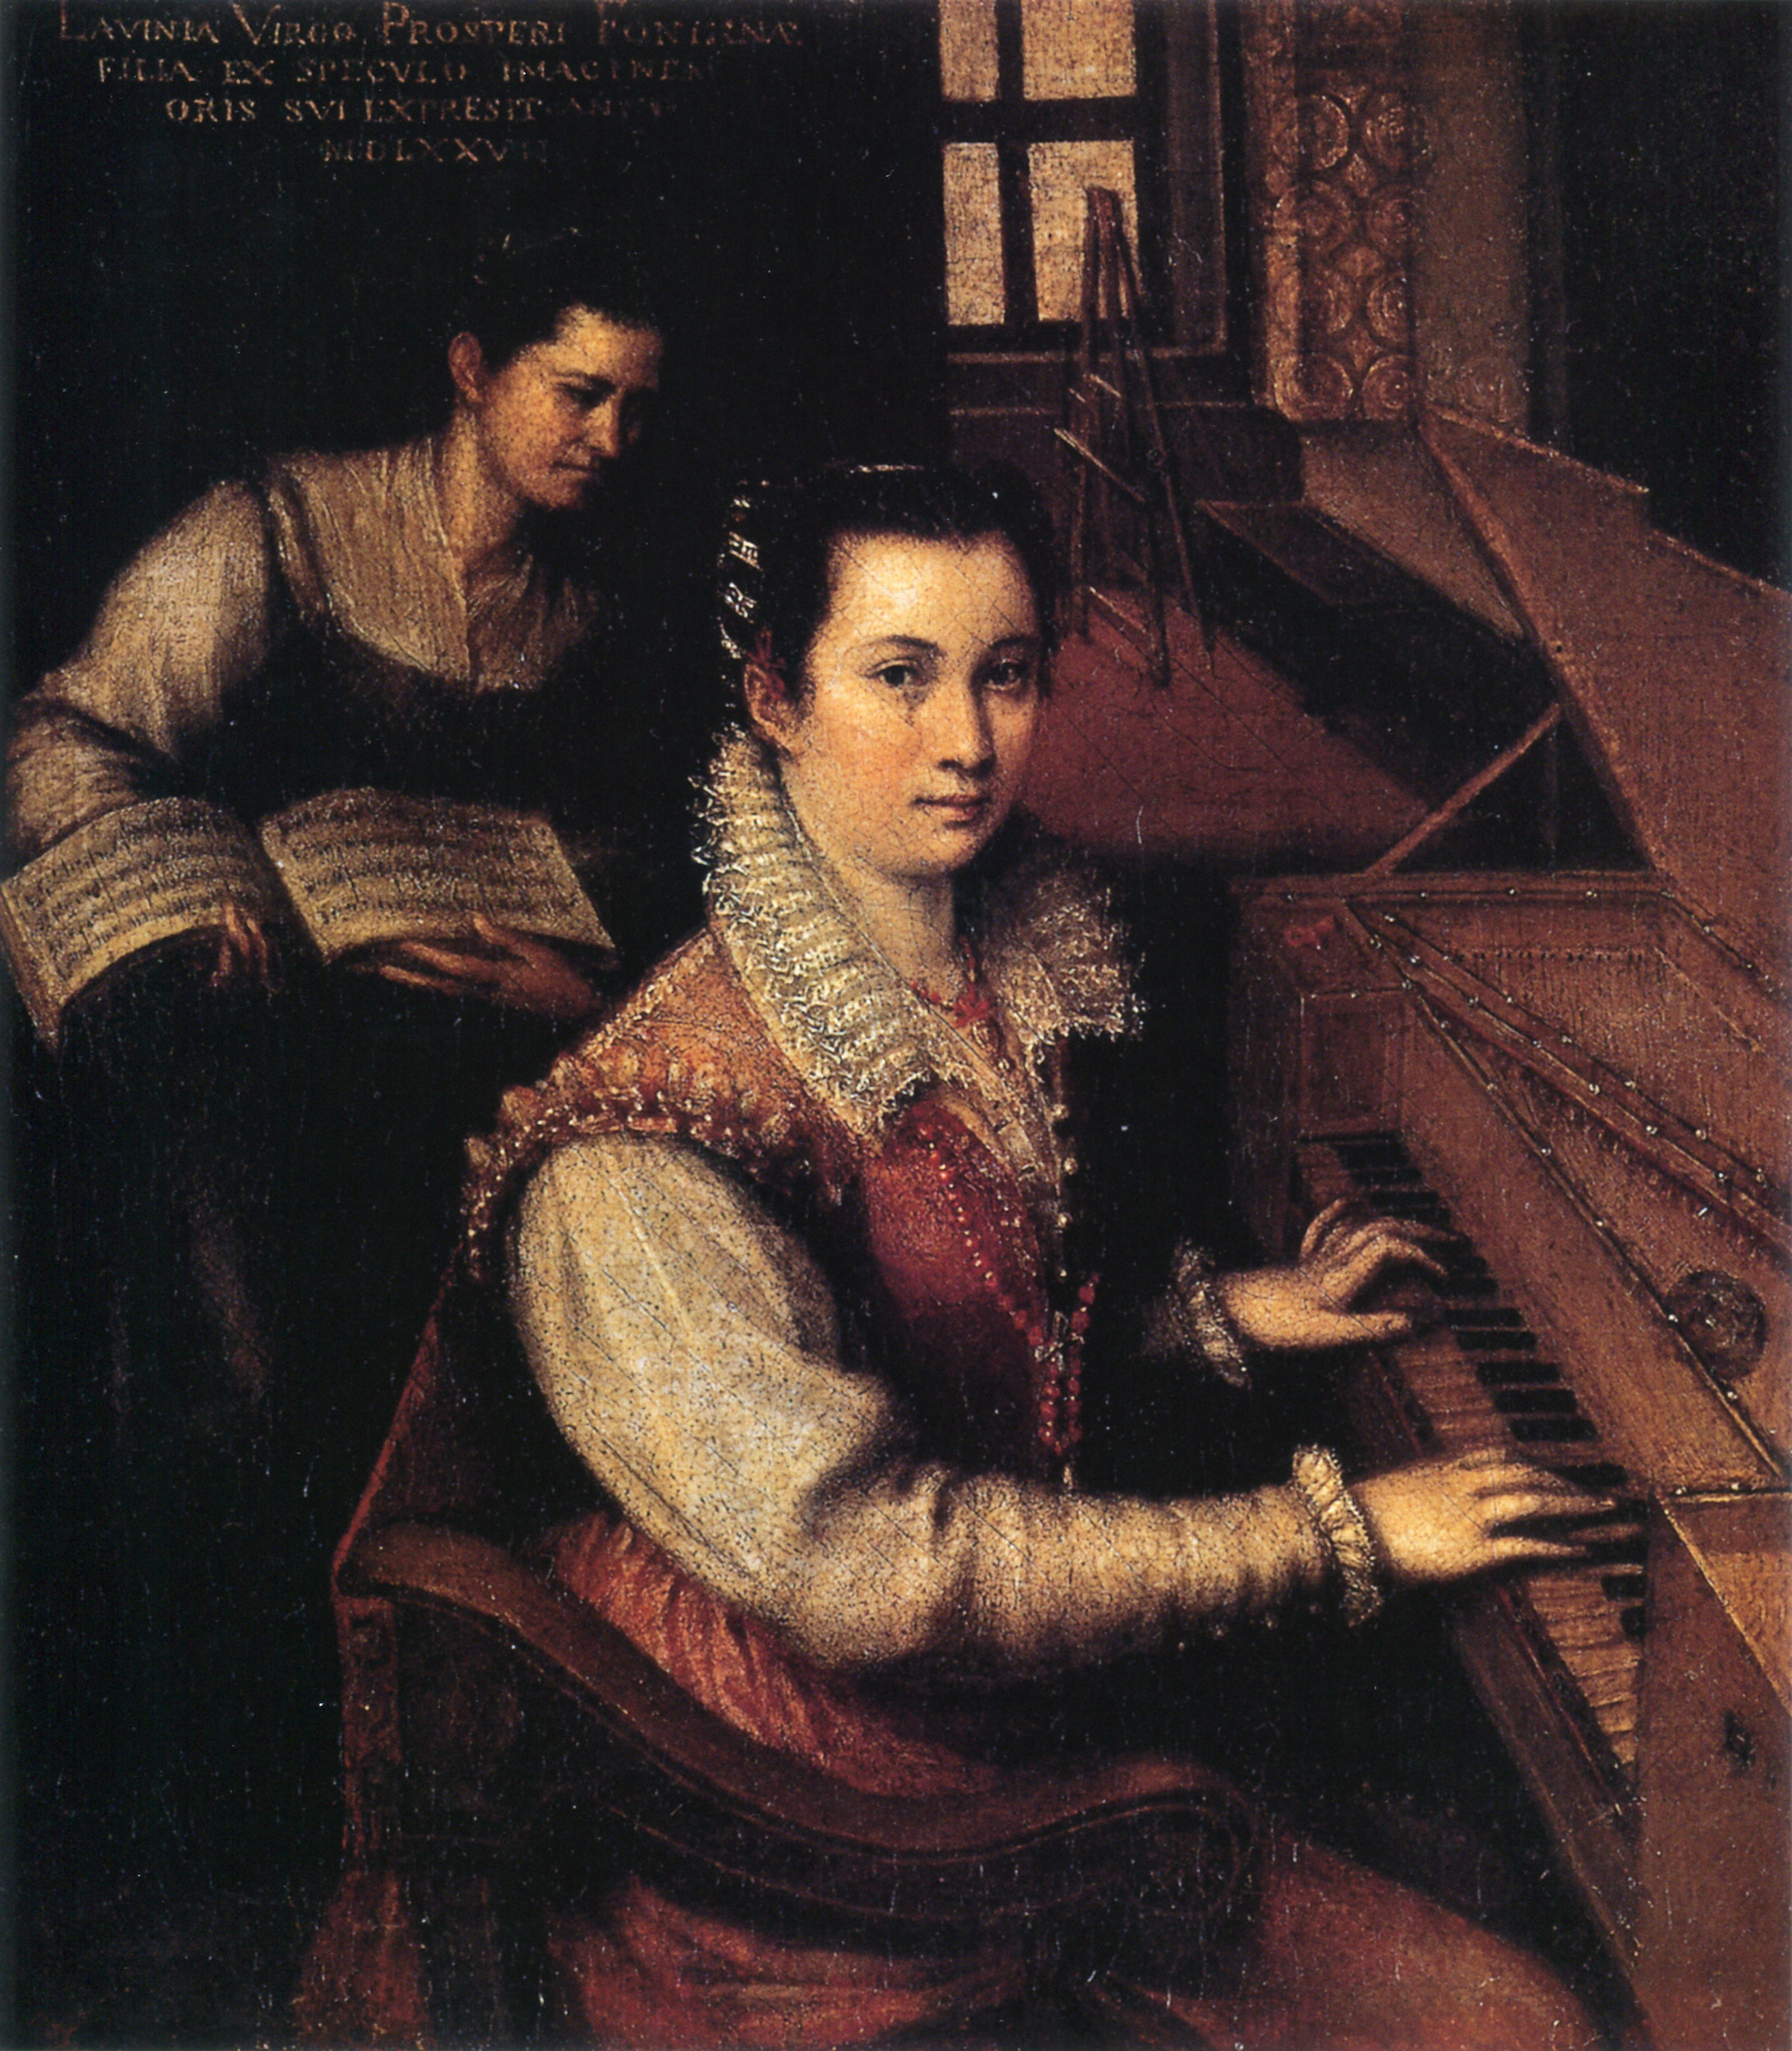 Lavinia Fontana - August 24, 1552 - August 11, 1614